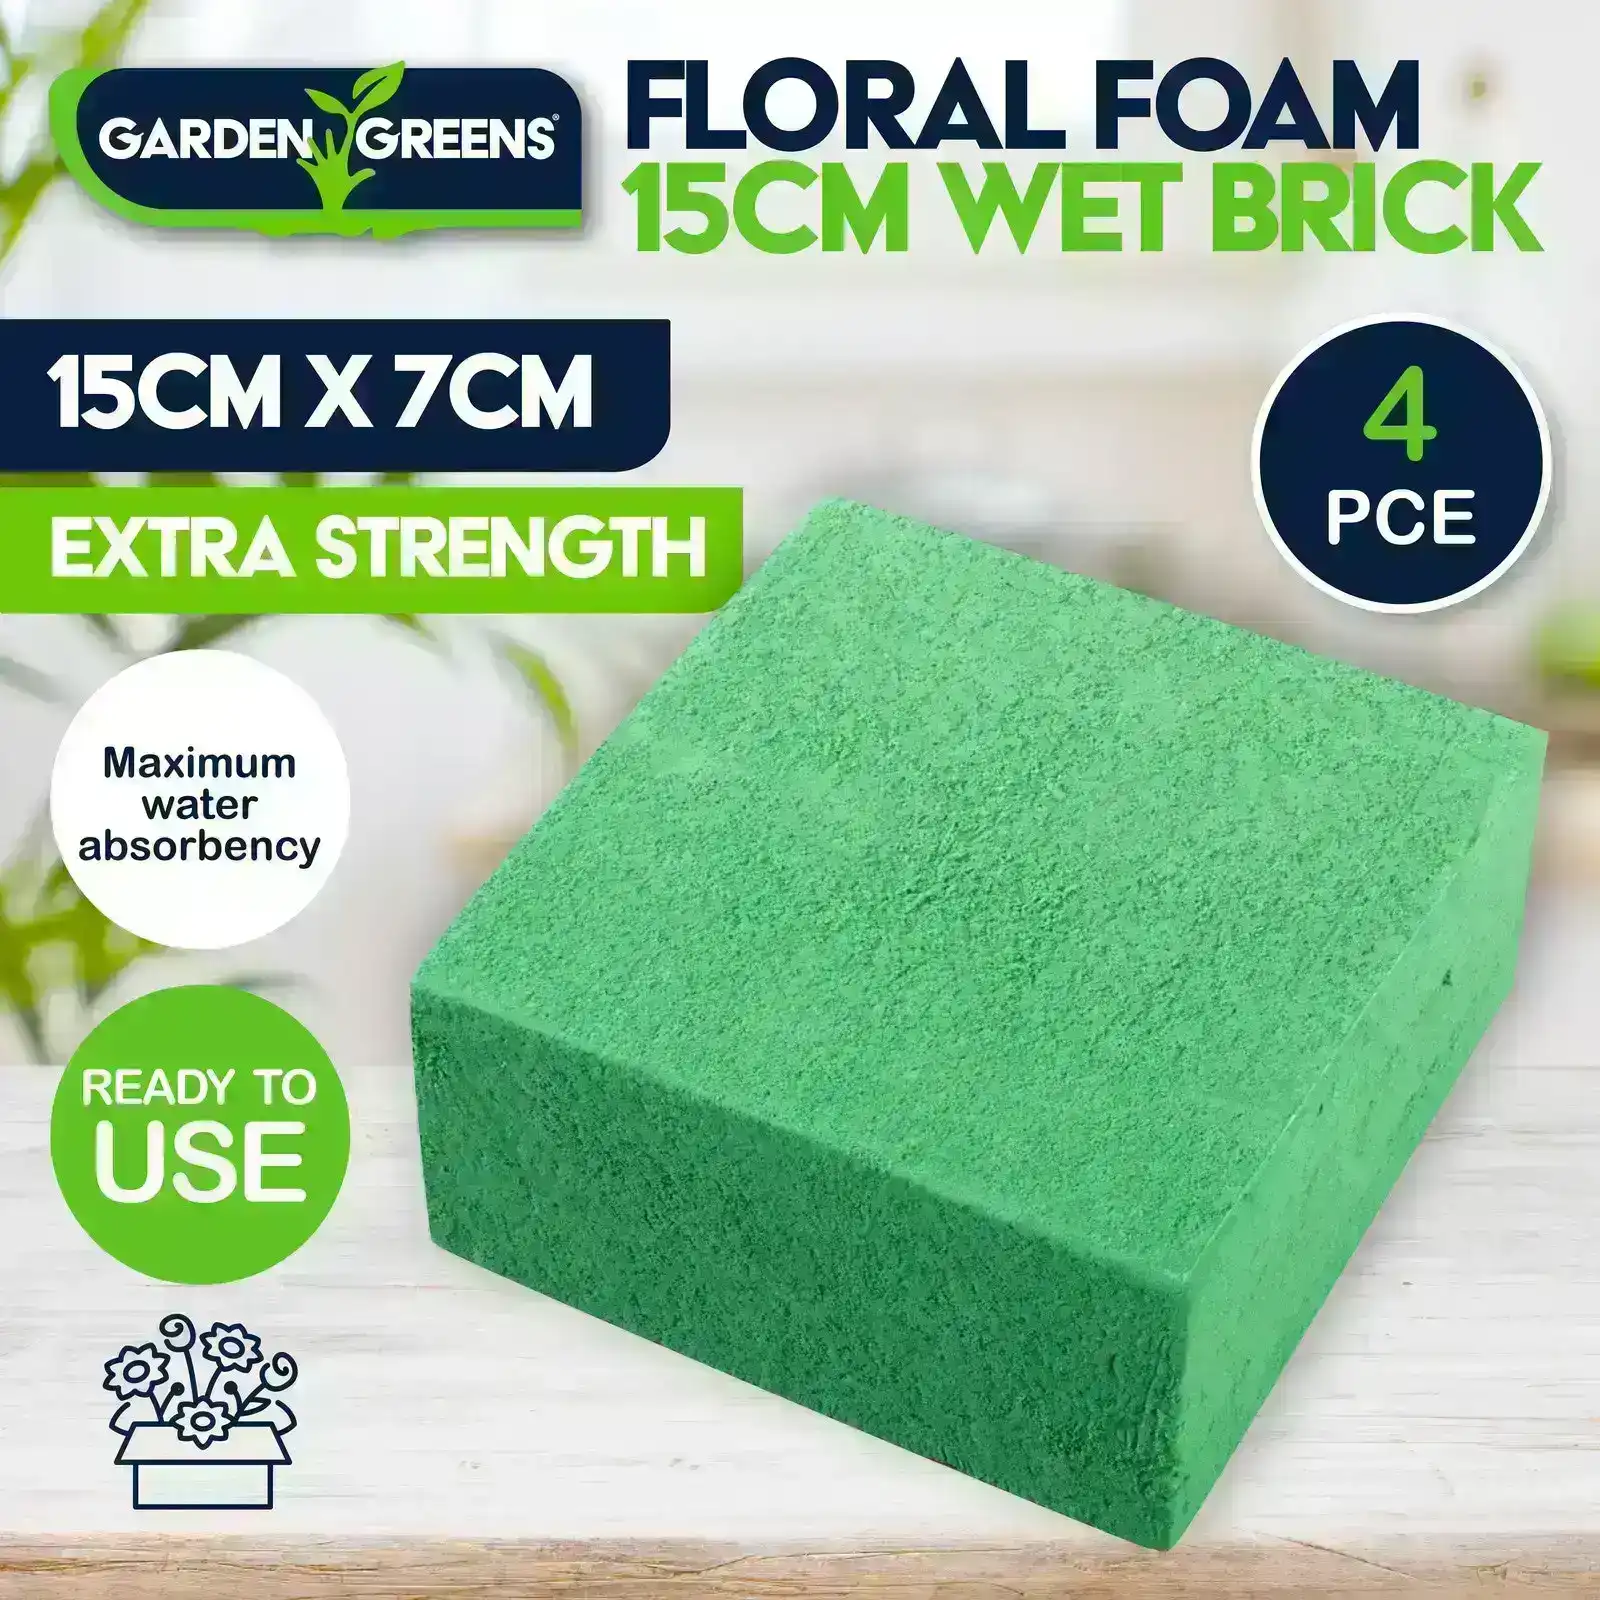 Garden Greens® 4PK Floral Foam Wet Brick Flower Arrangements 15cm x 15cm x 7cm